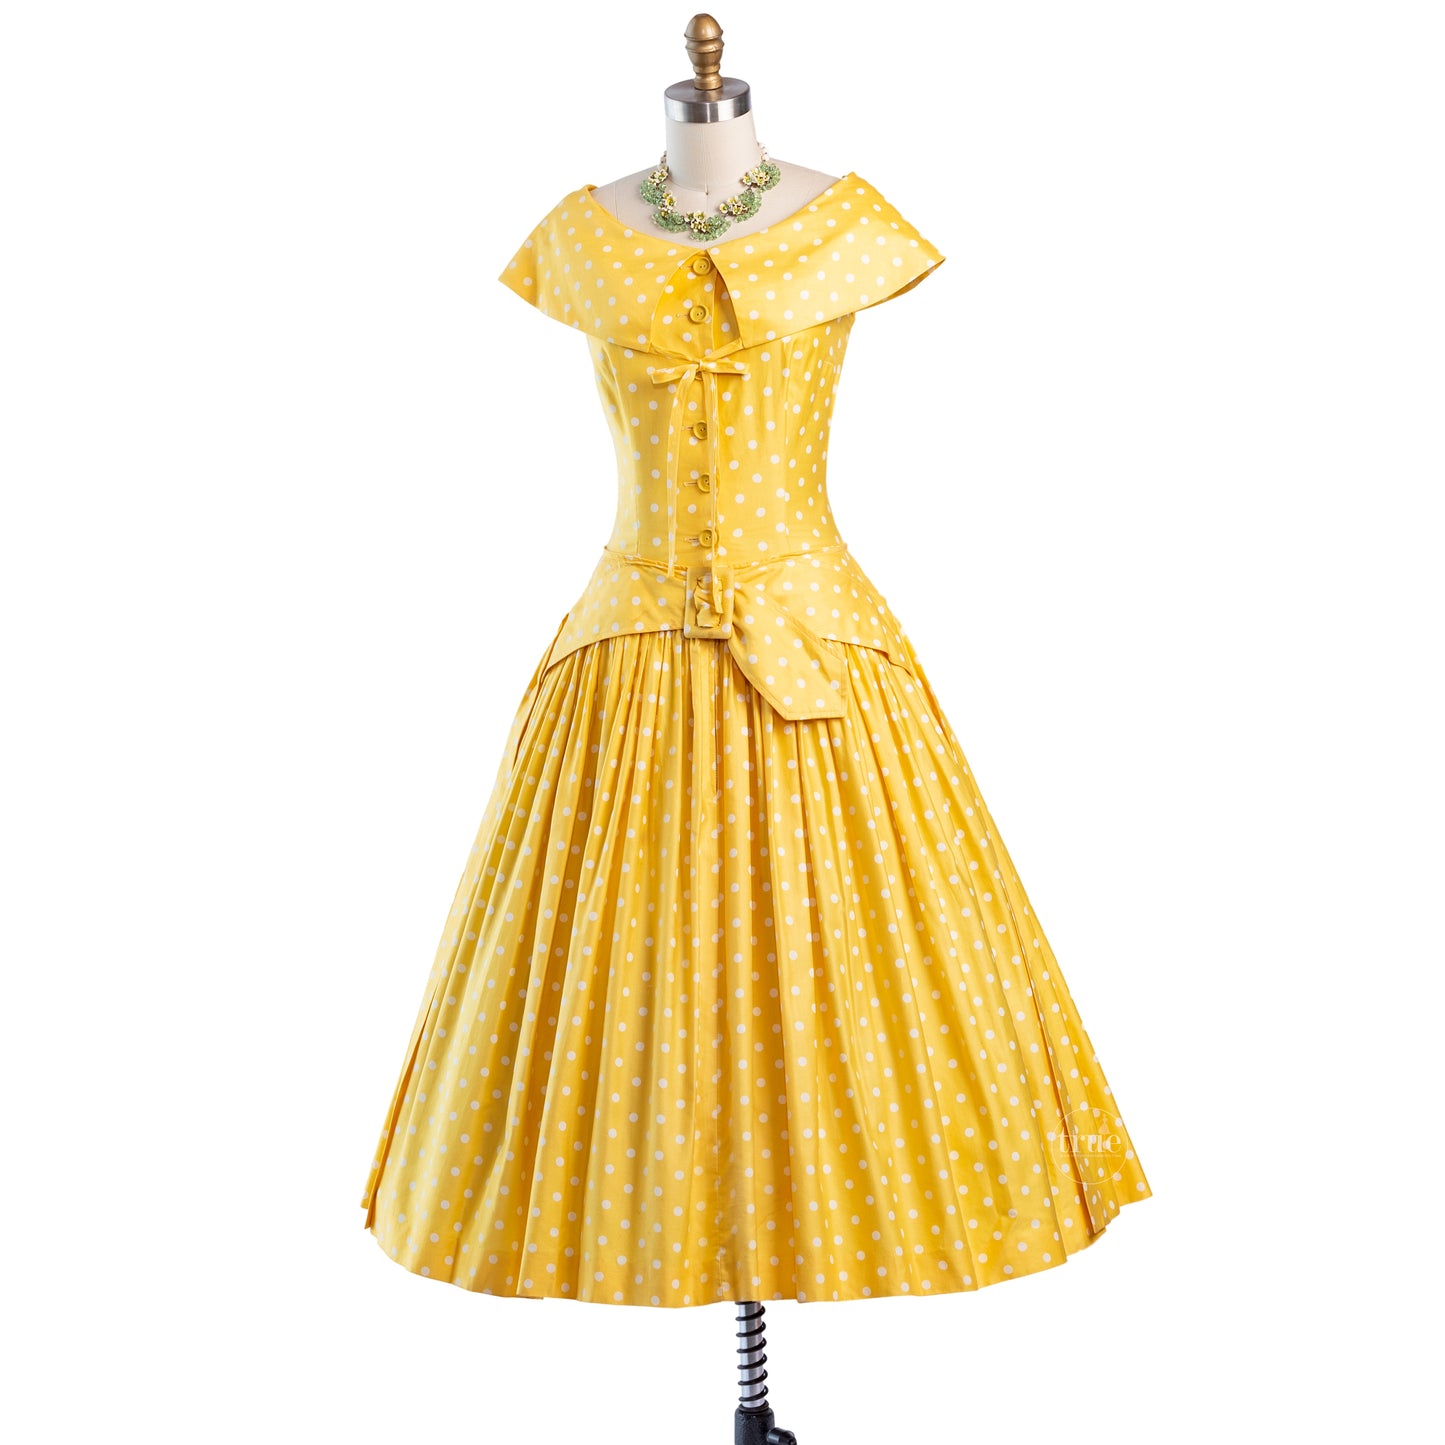 Vintage 1950's Dress ...Dior inspired Suzy Perette Yellow Polka Dot Cotton Full Skirt Dress